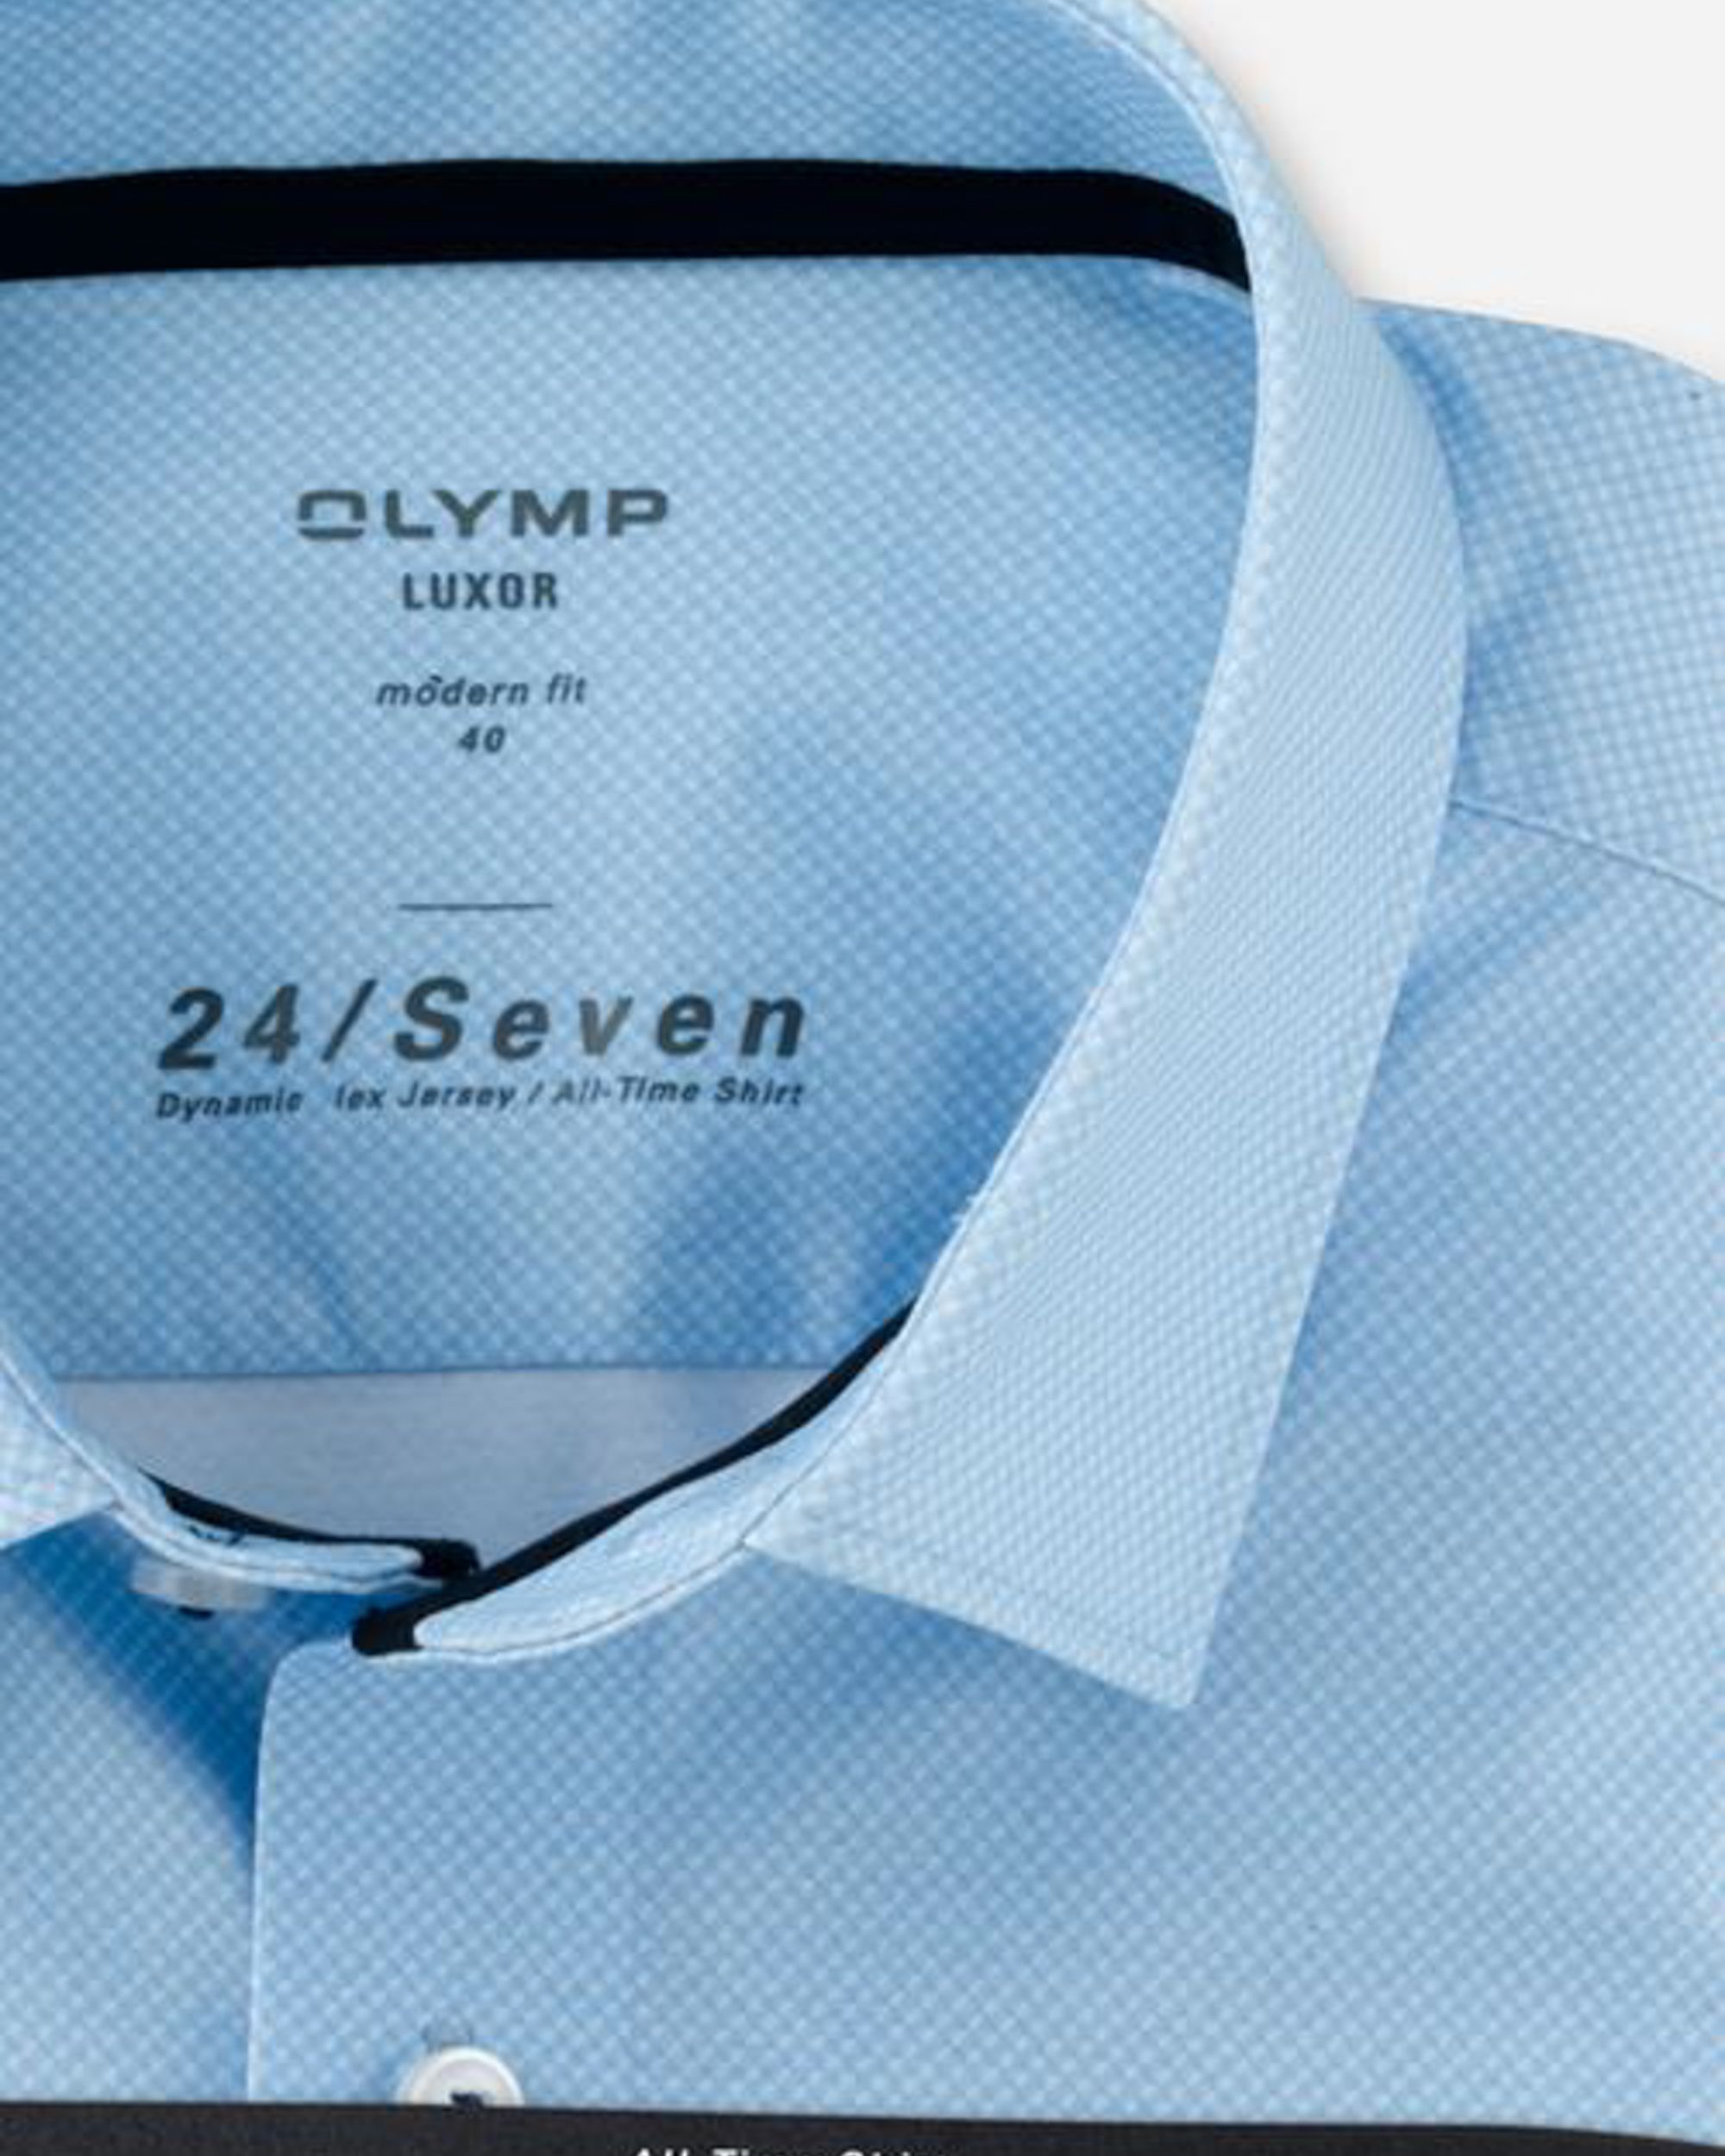 OLYMP Overhemd KM Blauw 081499-001-47